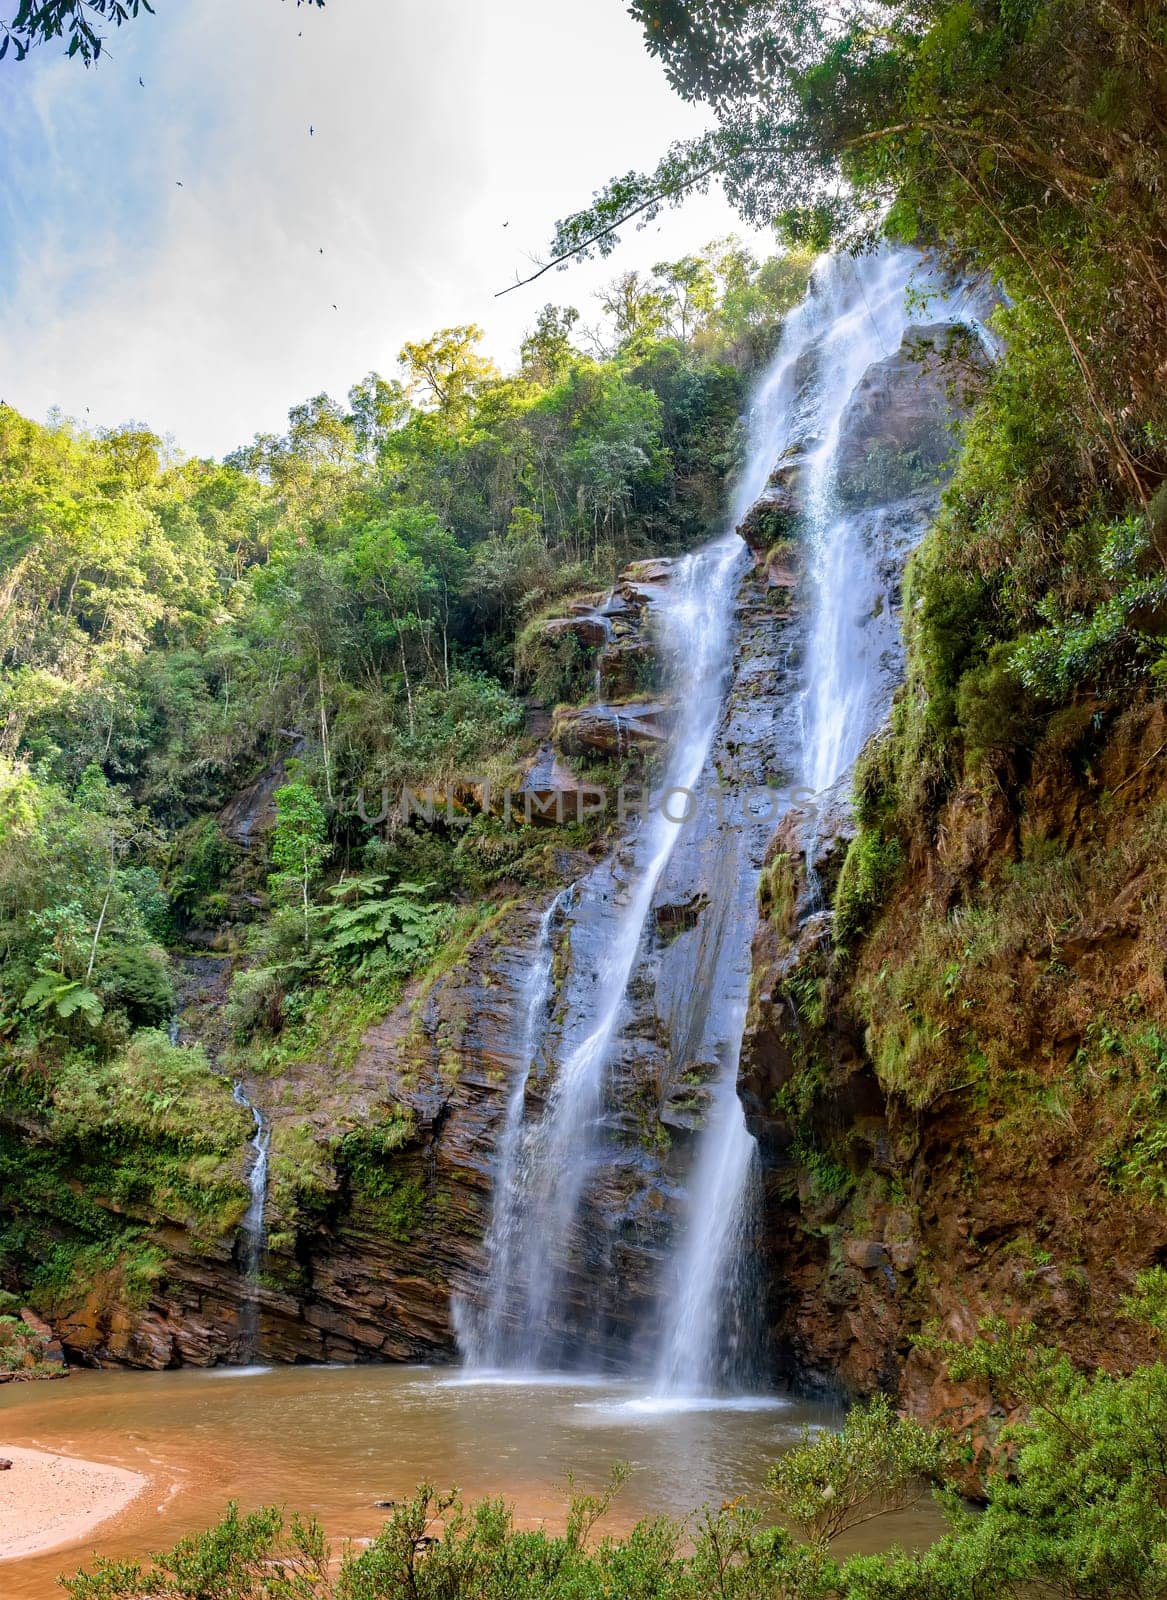 Stunning waterfall among the dense vegetation by Fred_Pinheiro